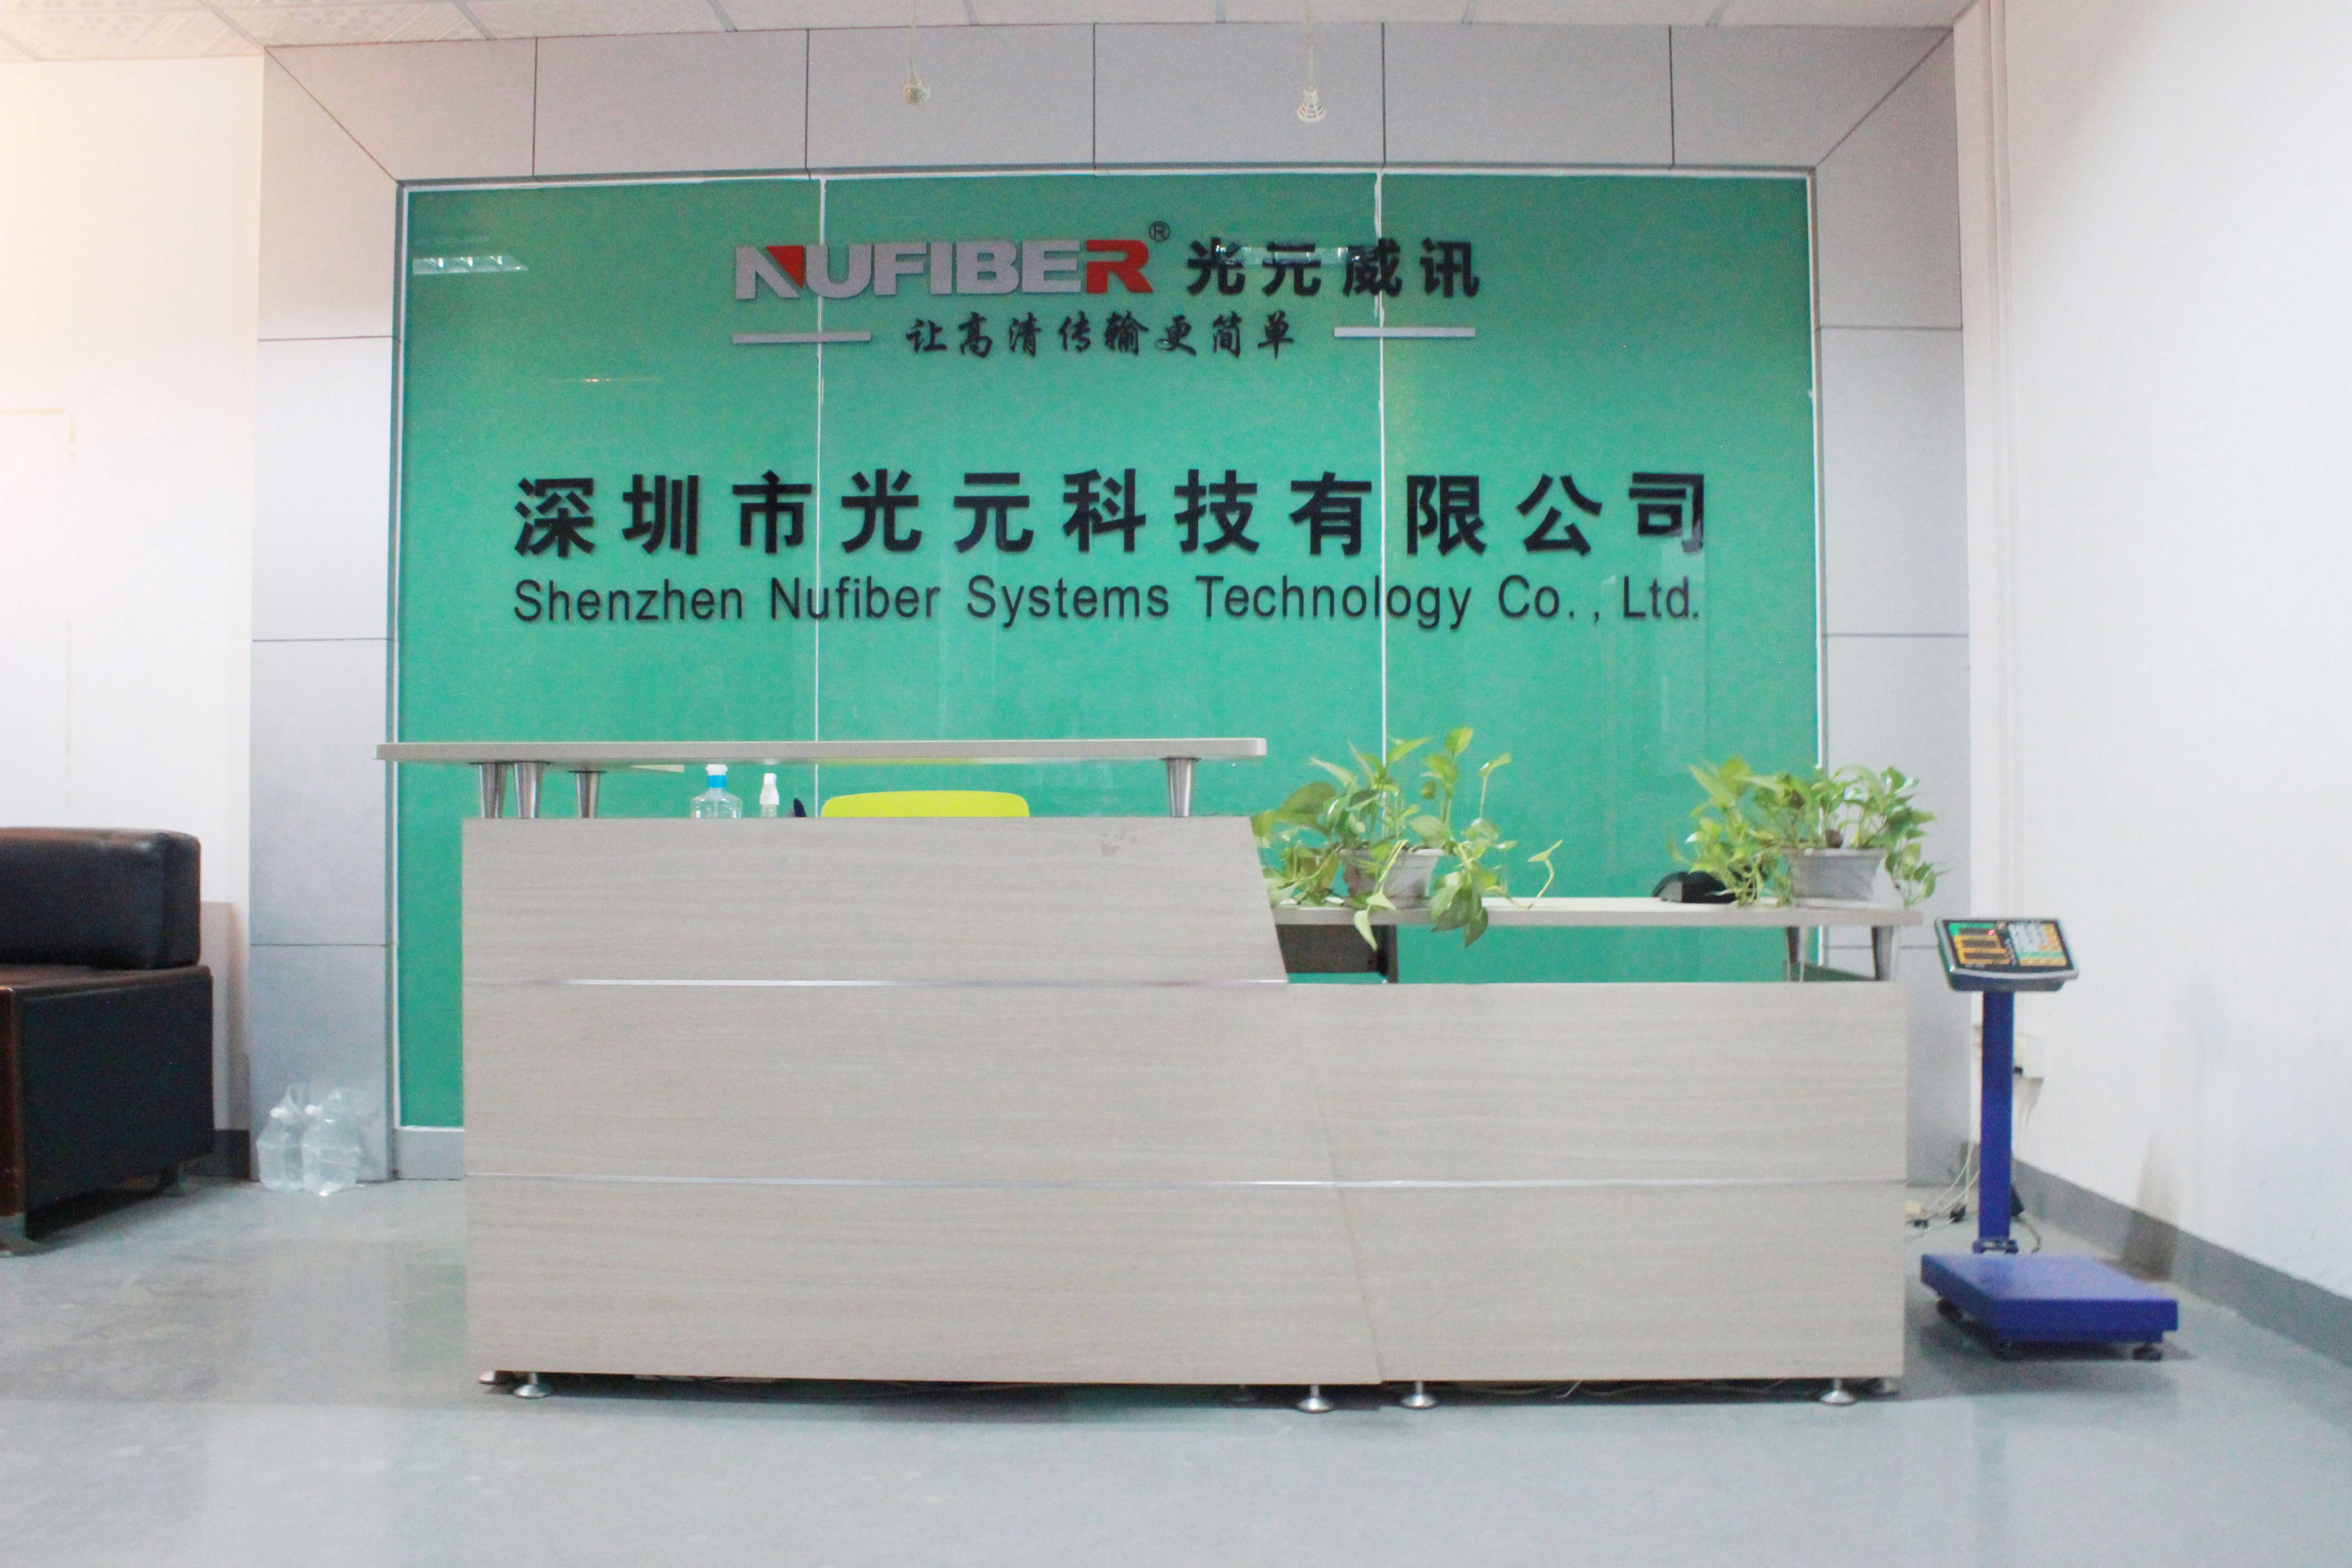 China Shenzhen Nufiber Systems Technology Co., Ltd.